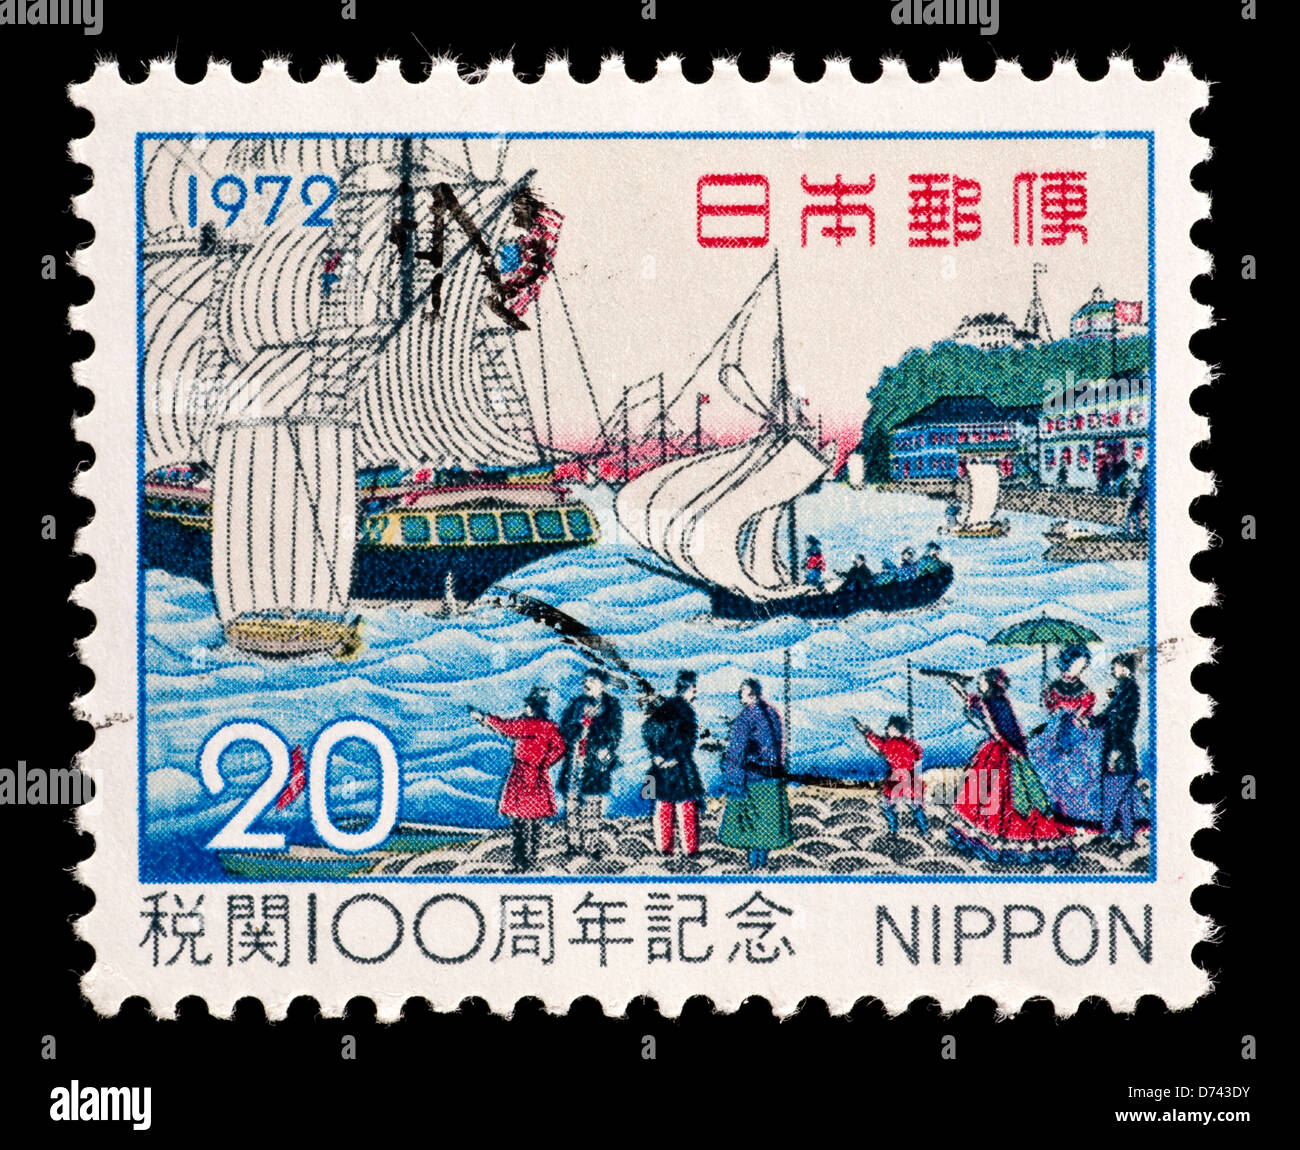 Japan postage stamp Stock Photo - Alamy